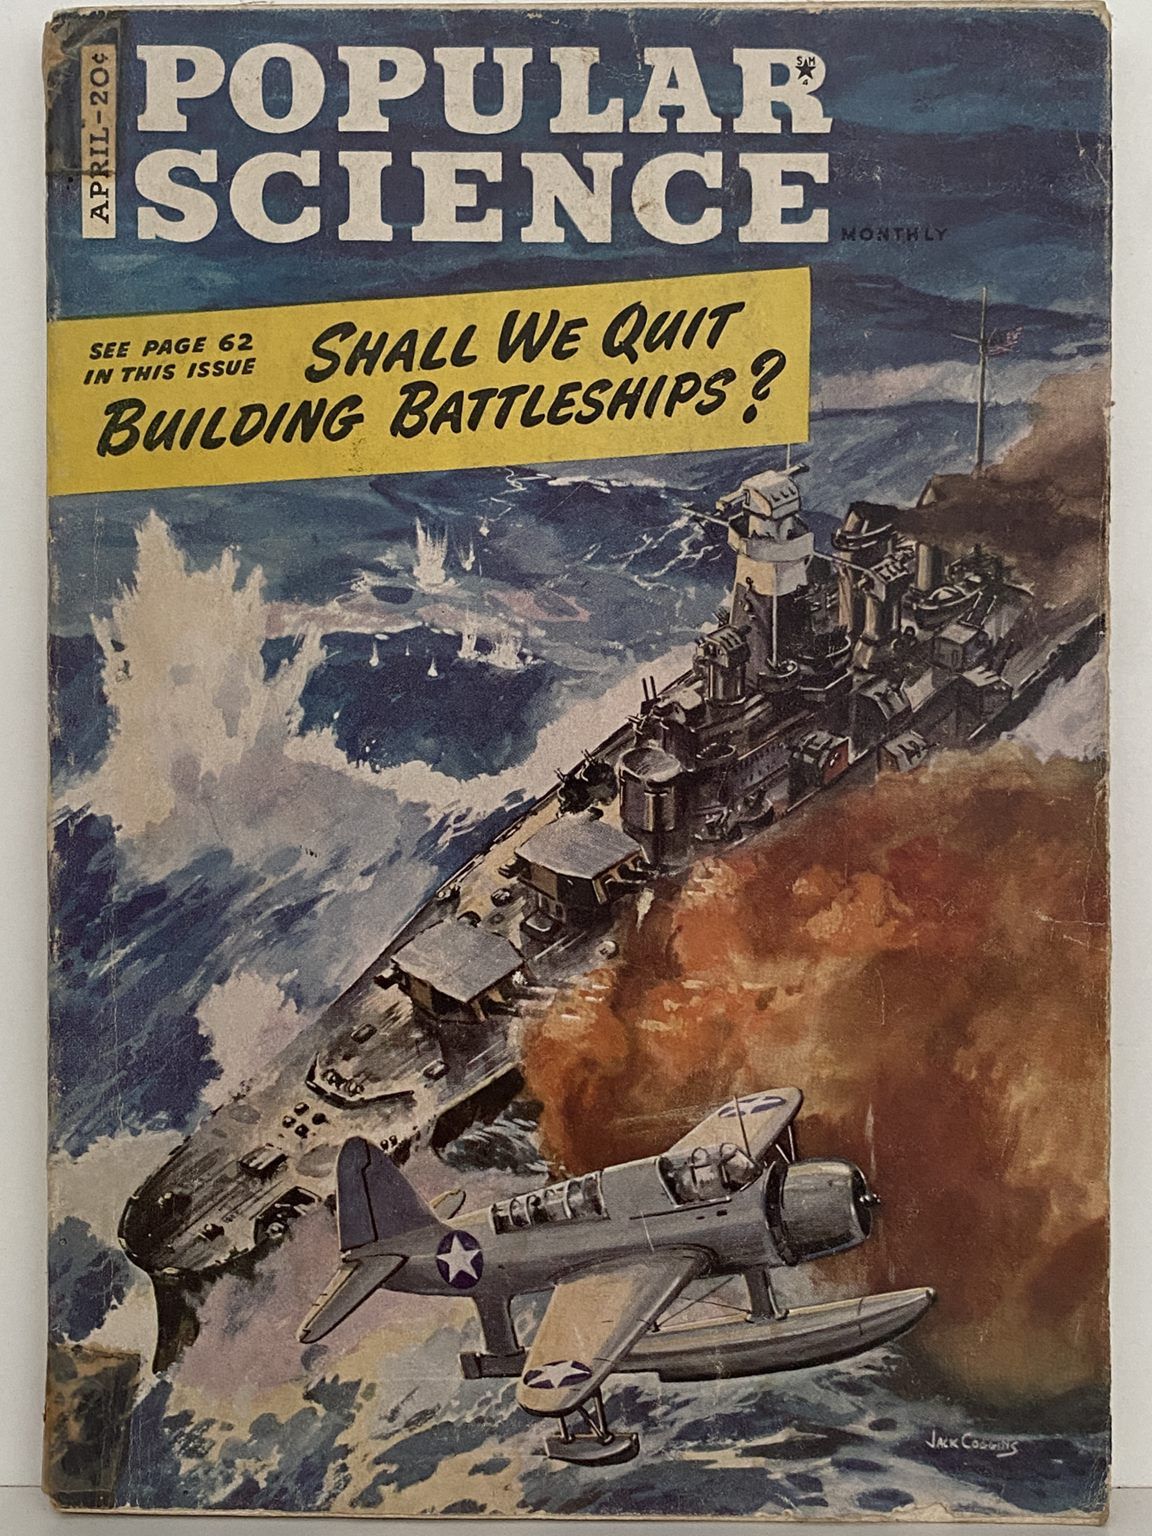 VINTAGE MAGAZINE: Popular Science, Vol. 142, No. 4 - April 1943